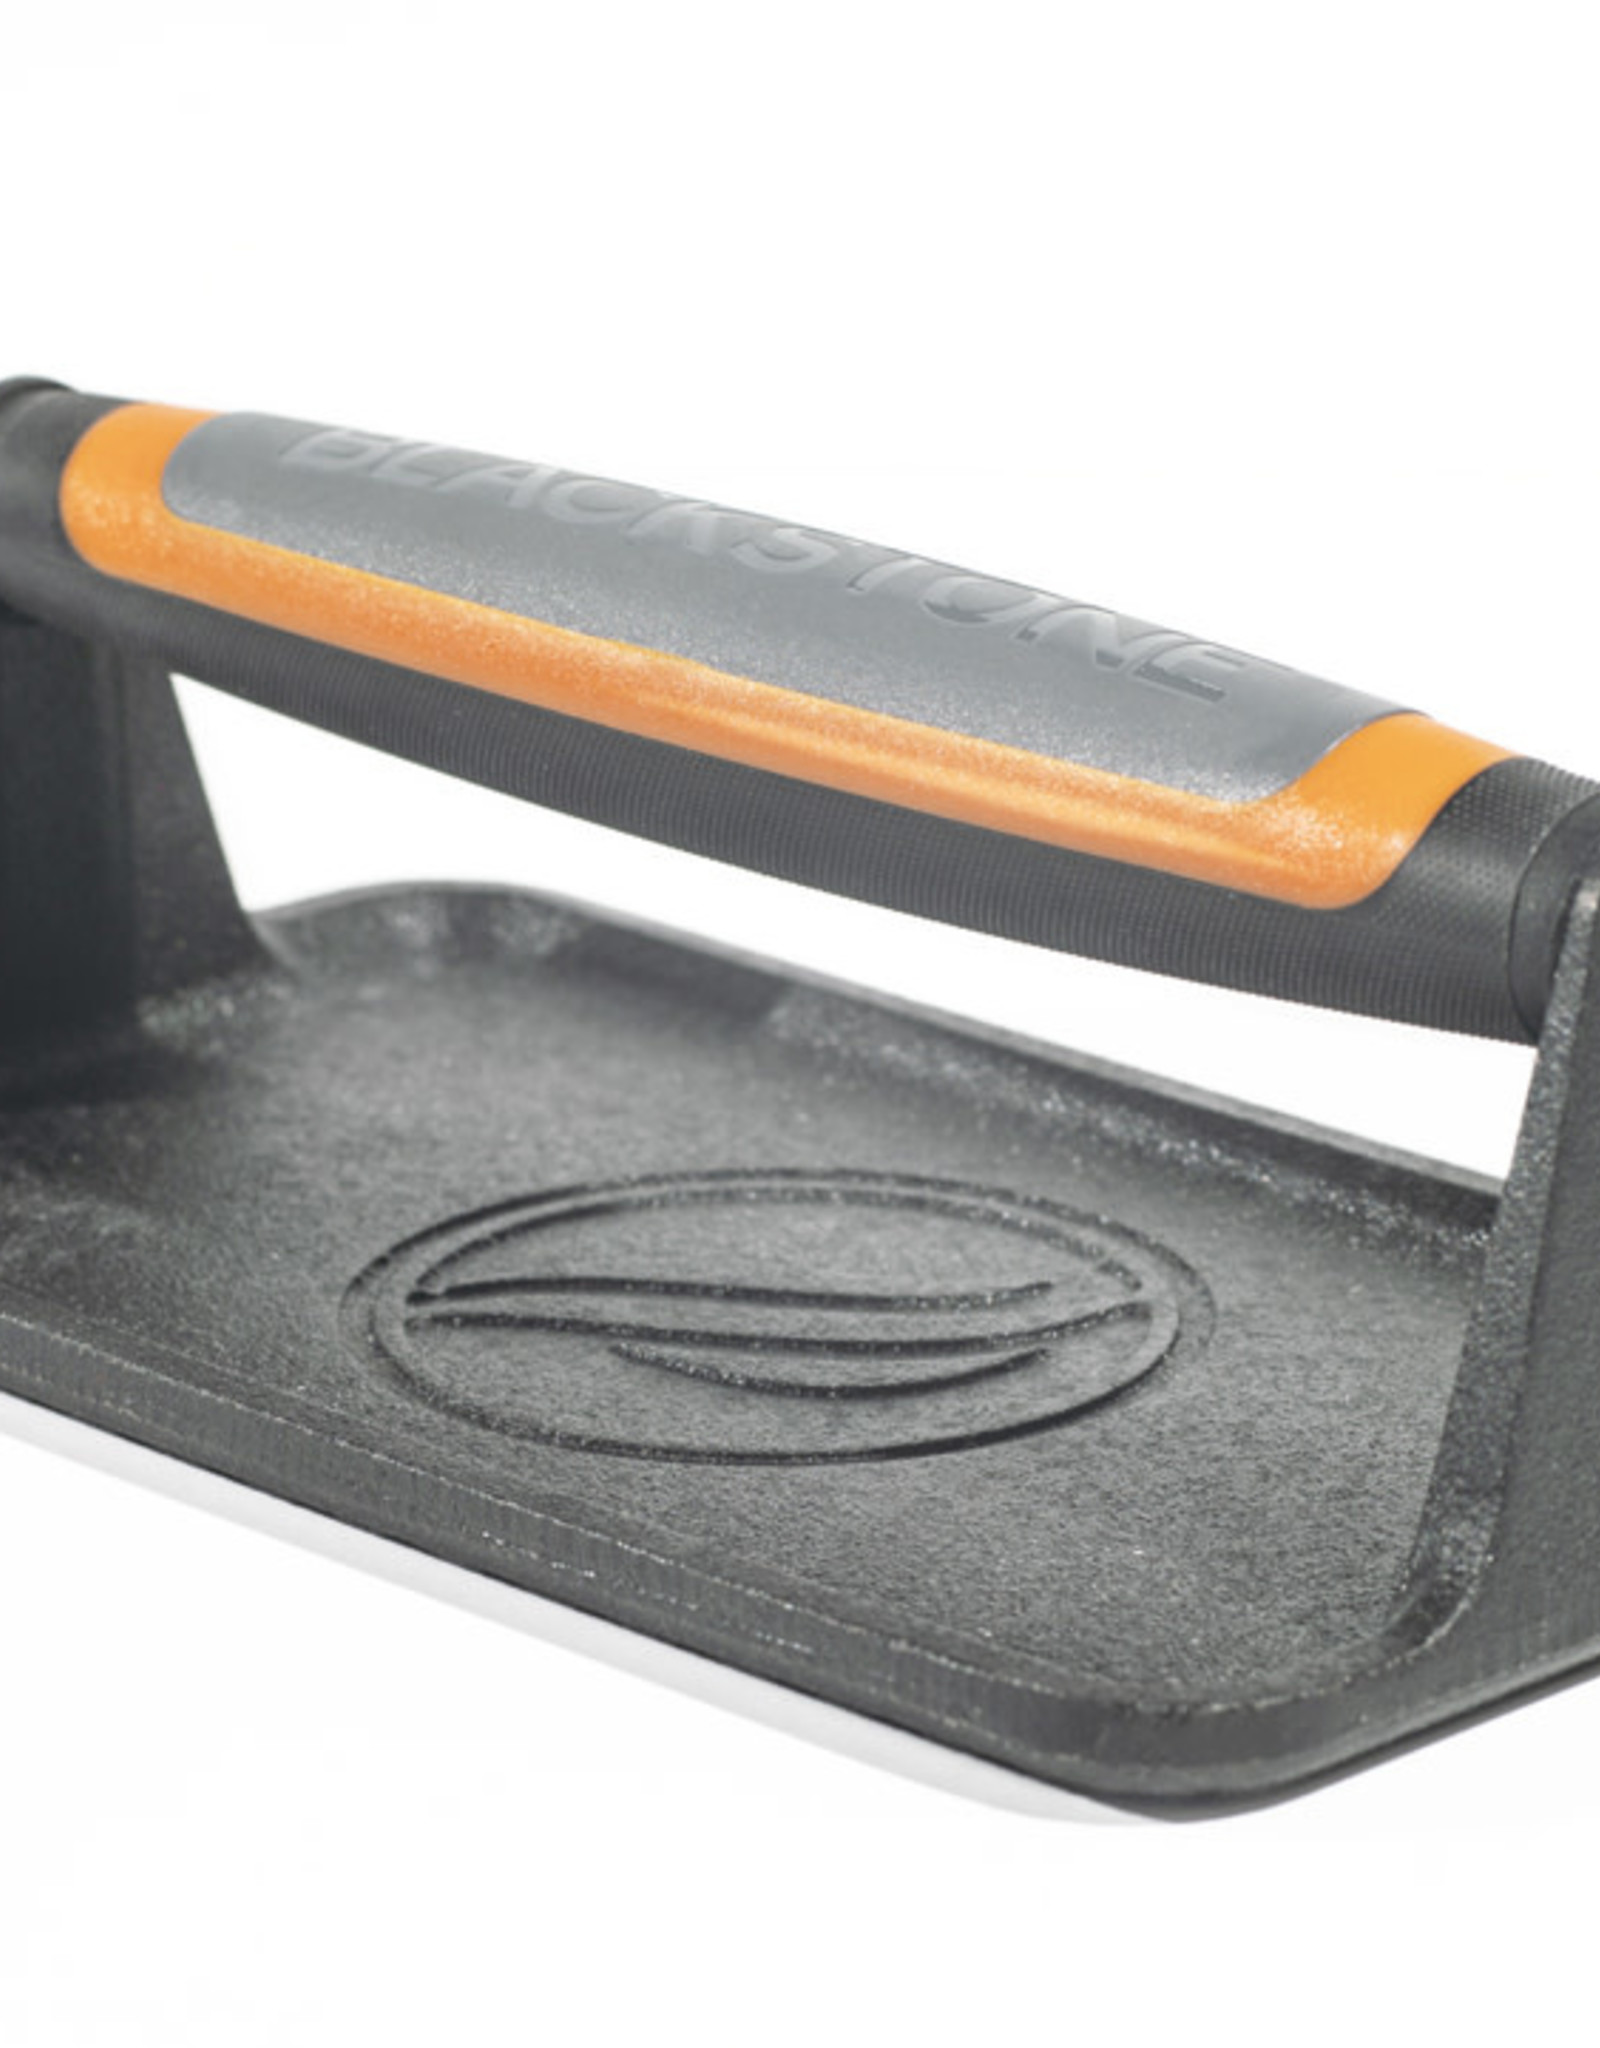 Blackstone Blackstone Cast Iron Griddle Press with Non-Slip Handle, Medium - 5237